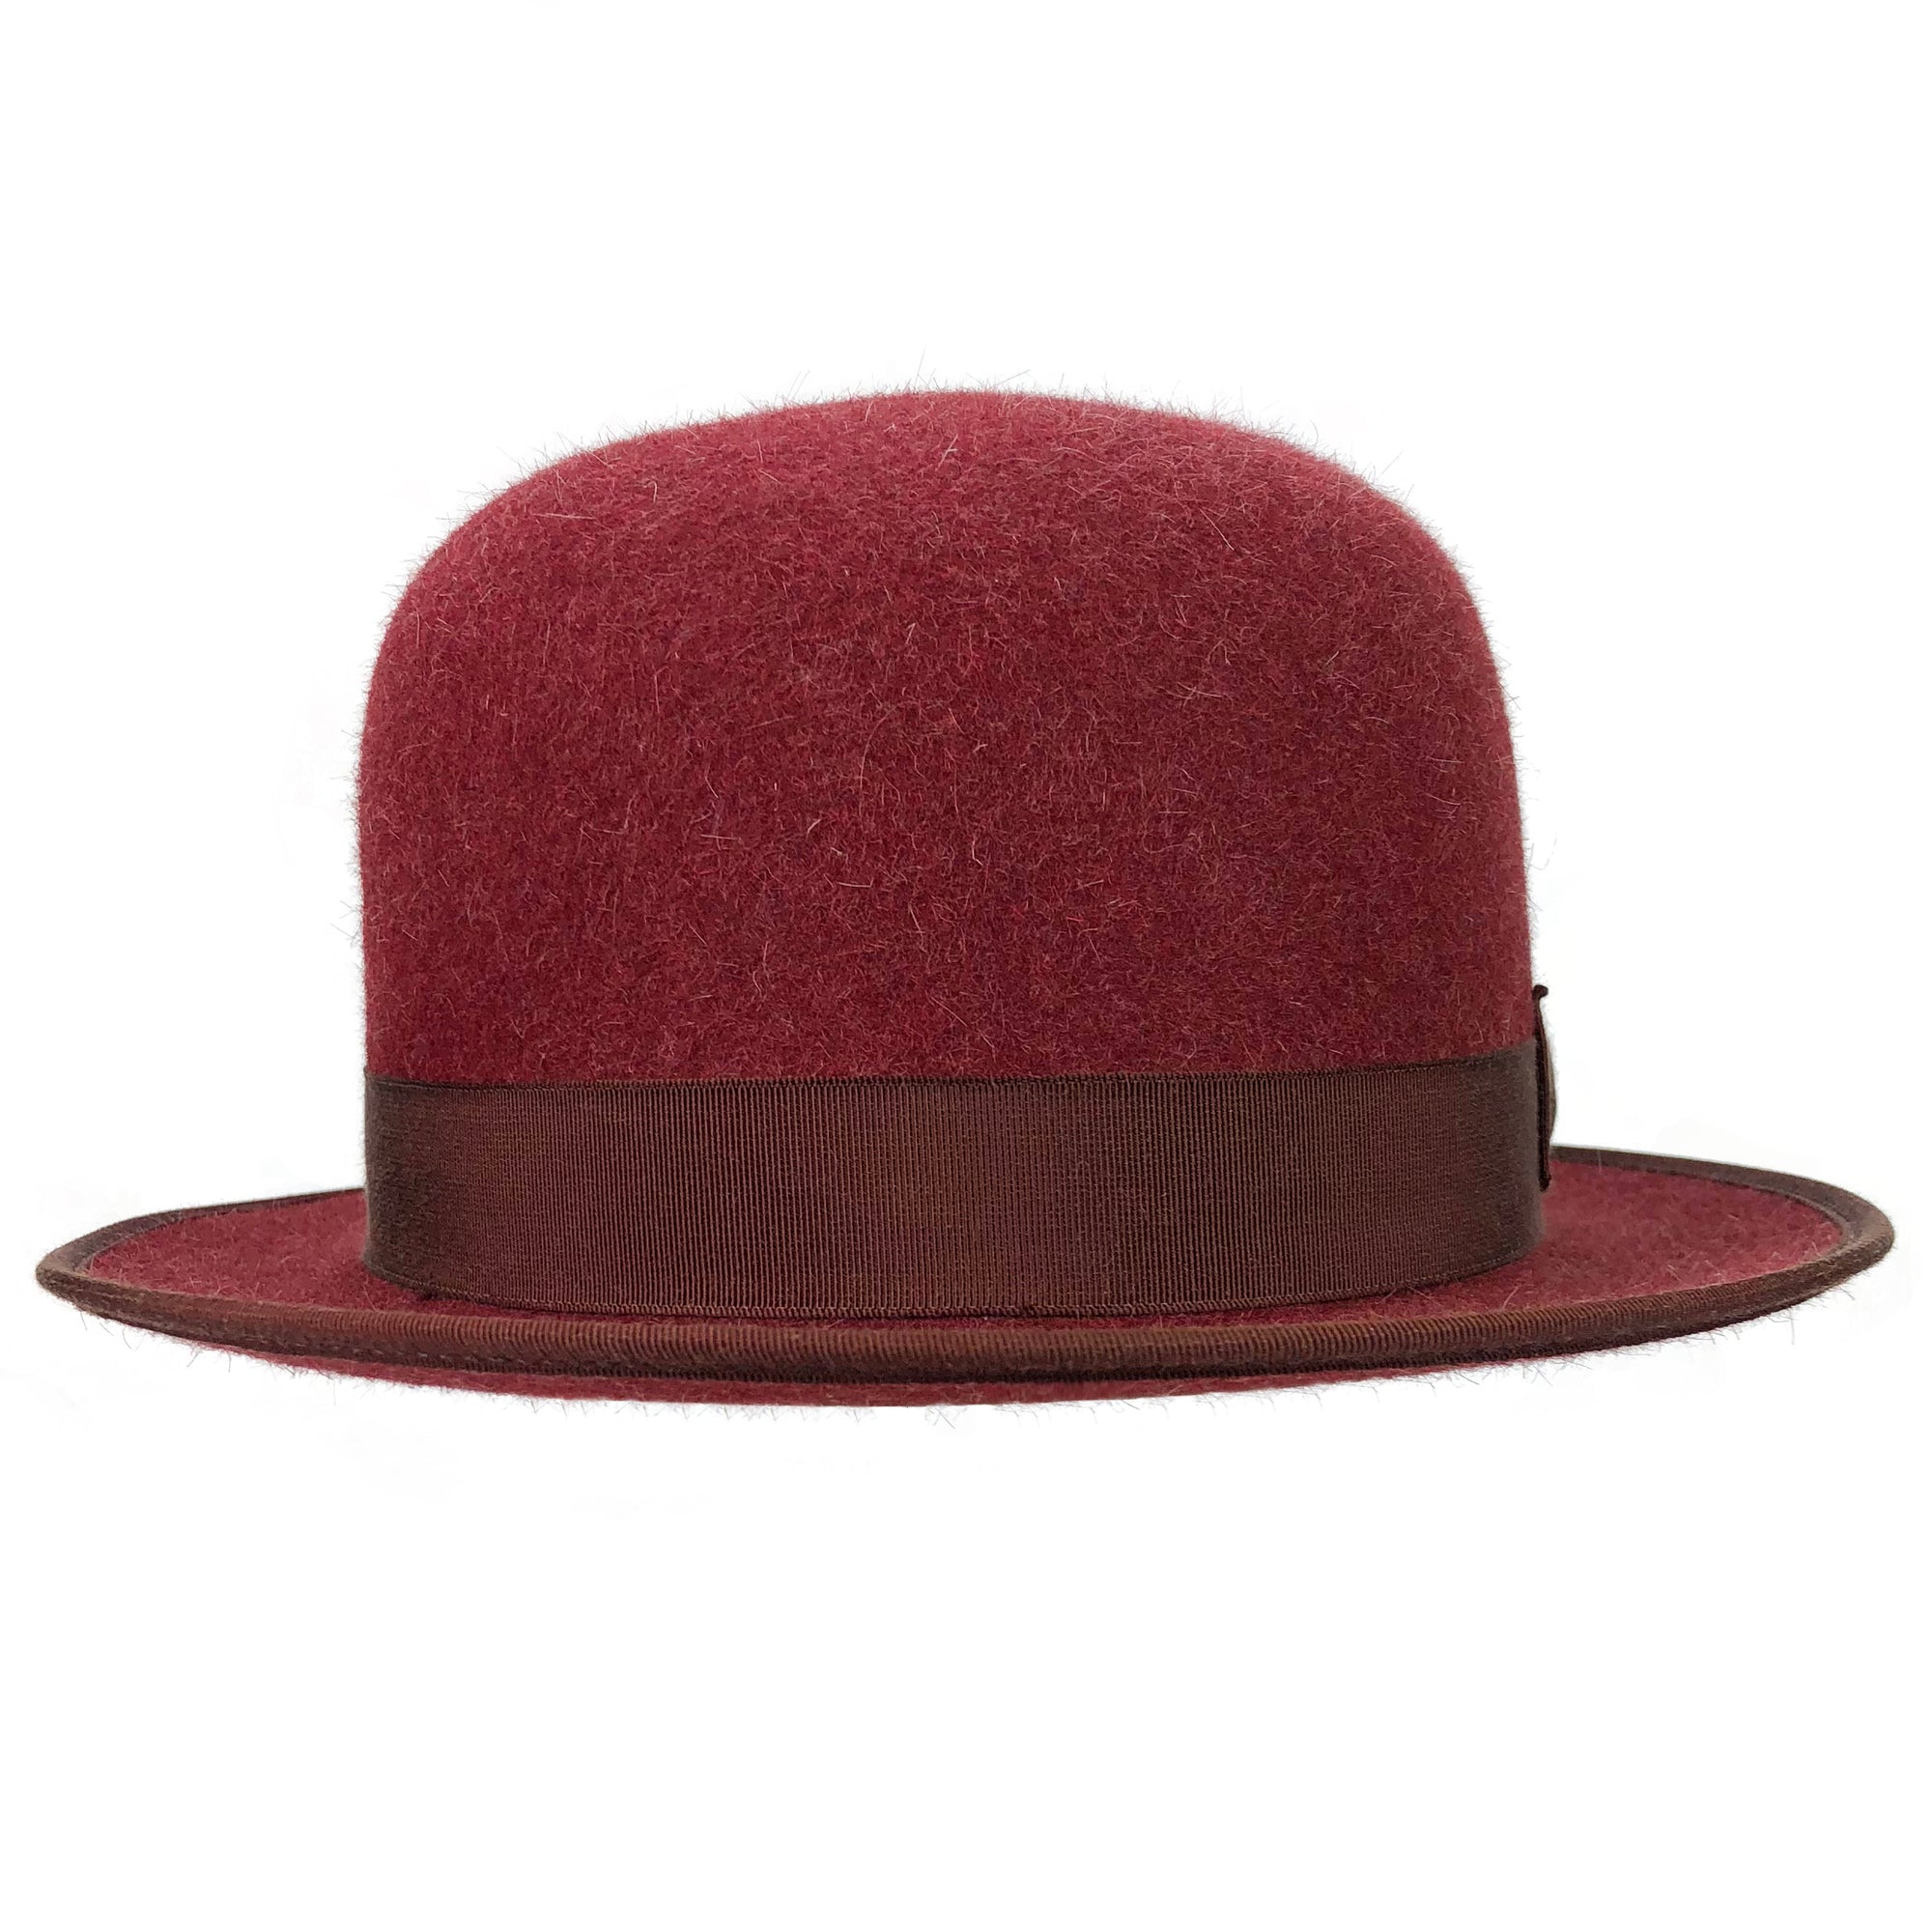 hatWRKS original burgdorf bowler hat